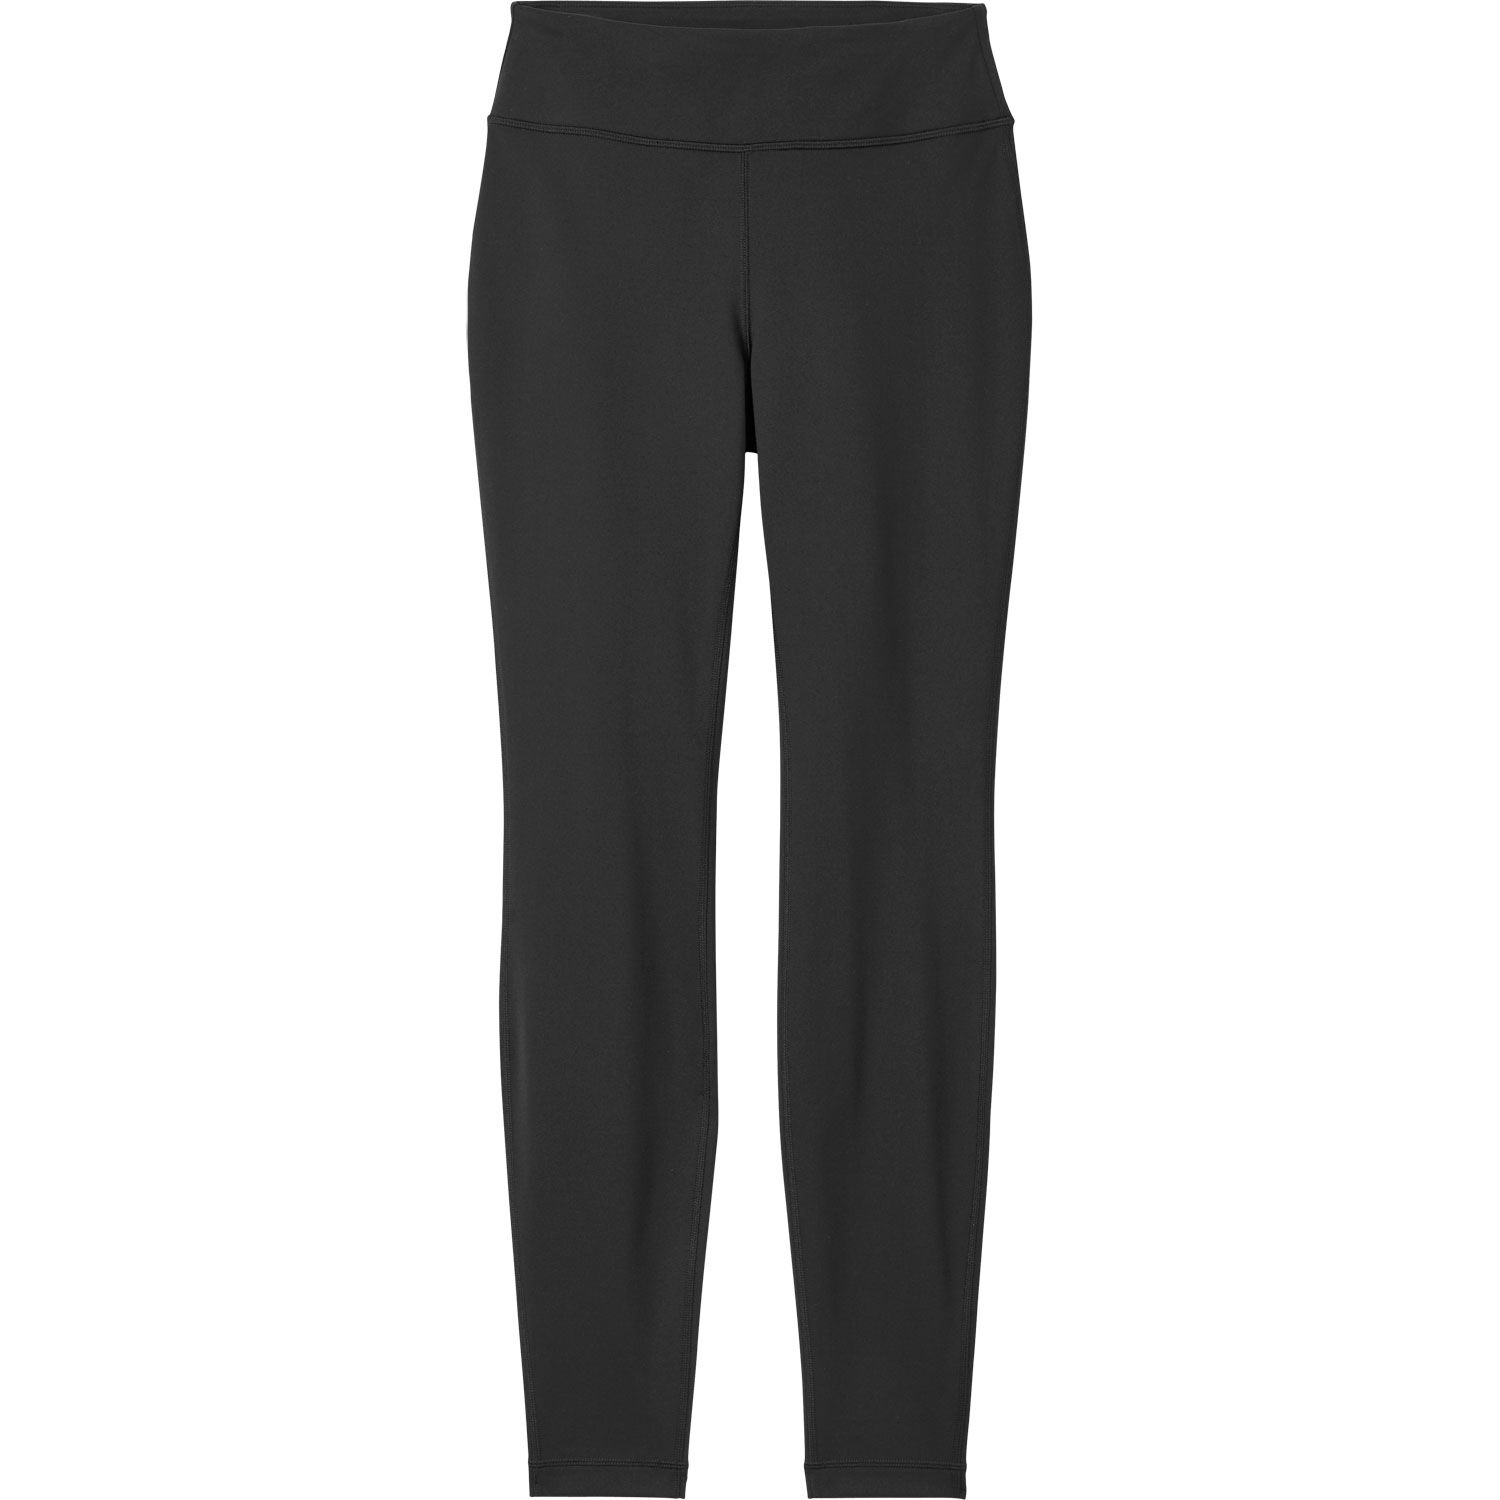 Duluth Trading Co Womens XS Gray Yoga Pants Leggings Side Zip Pocket | eBay